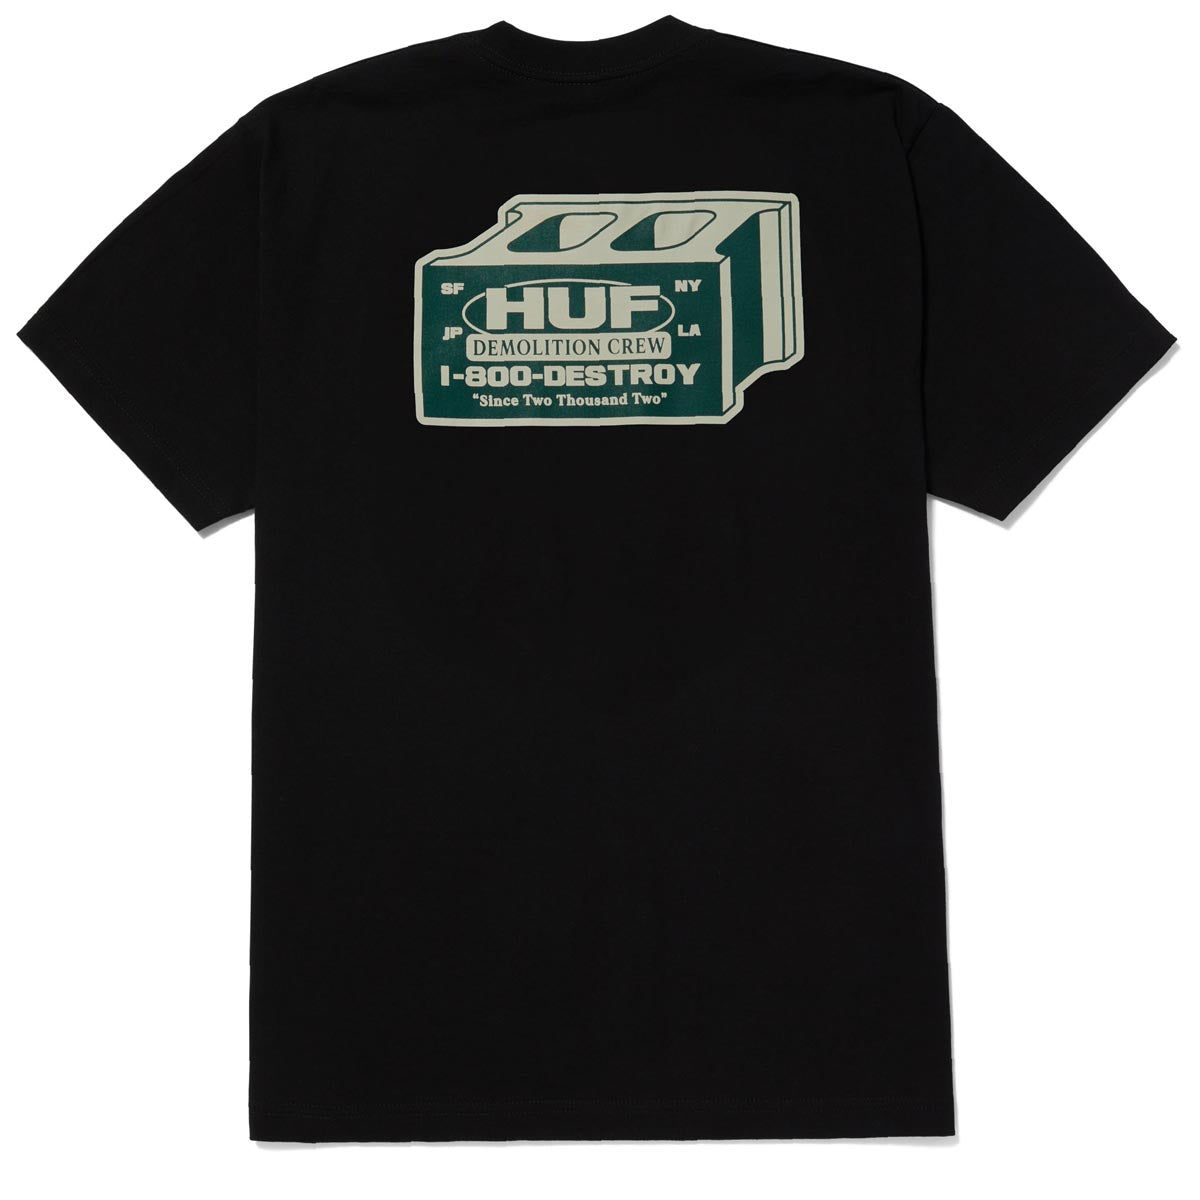 HUF Demolition Crew T-Shirt - Black image 1